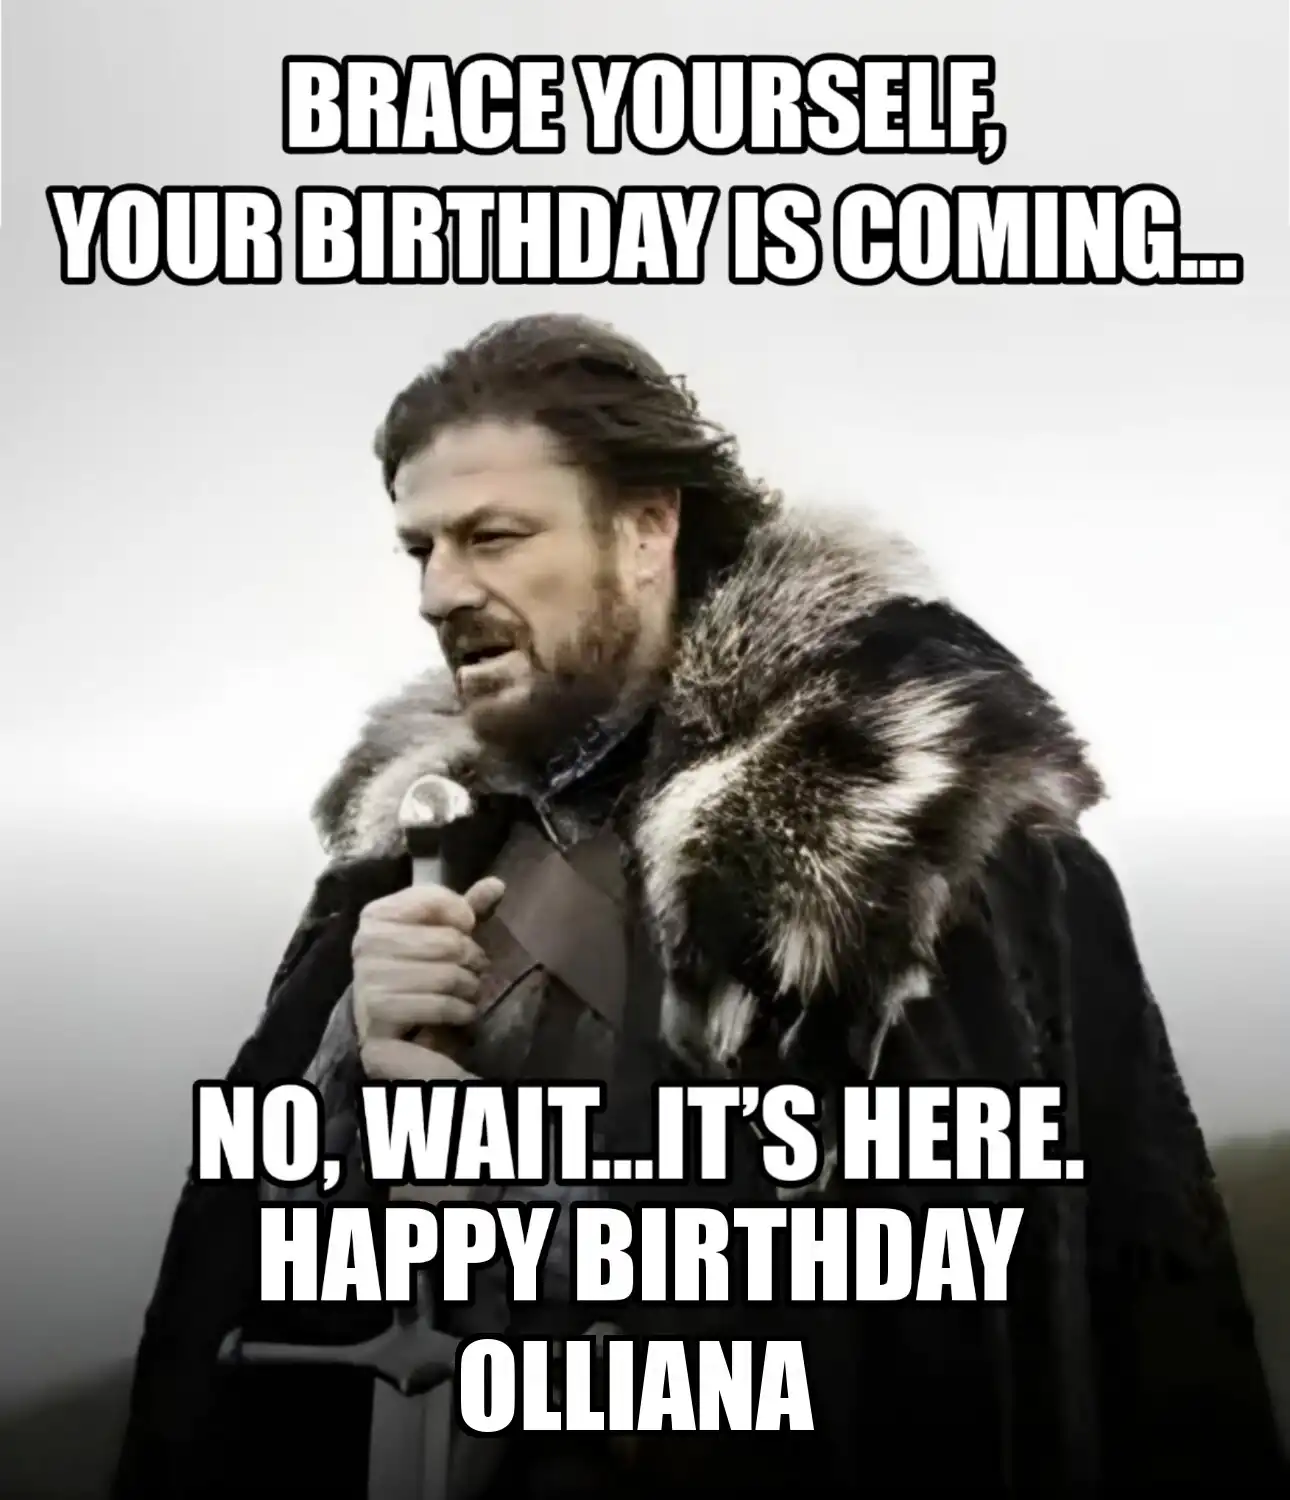 Happy Birthday Olliana Brace Yourself Your Birthday Is Coming Meme